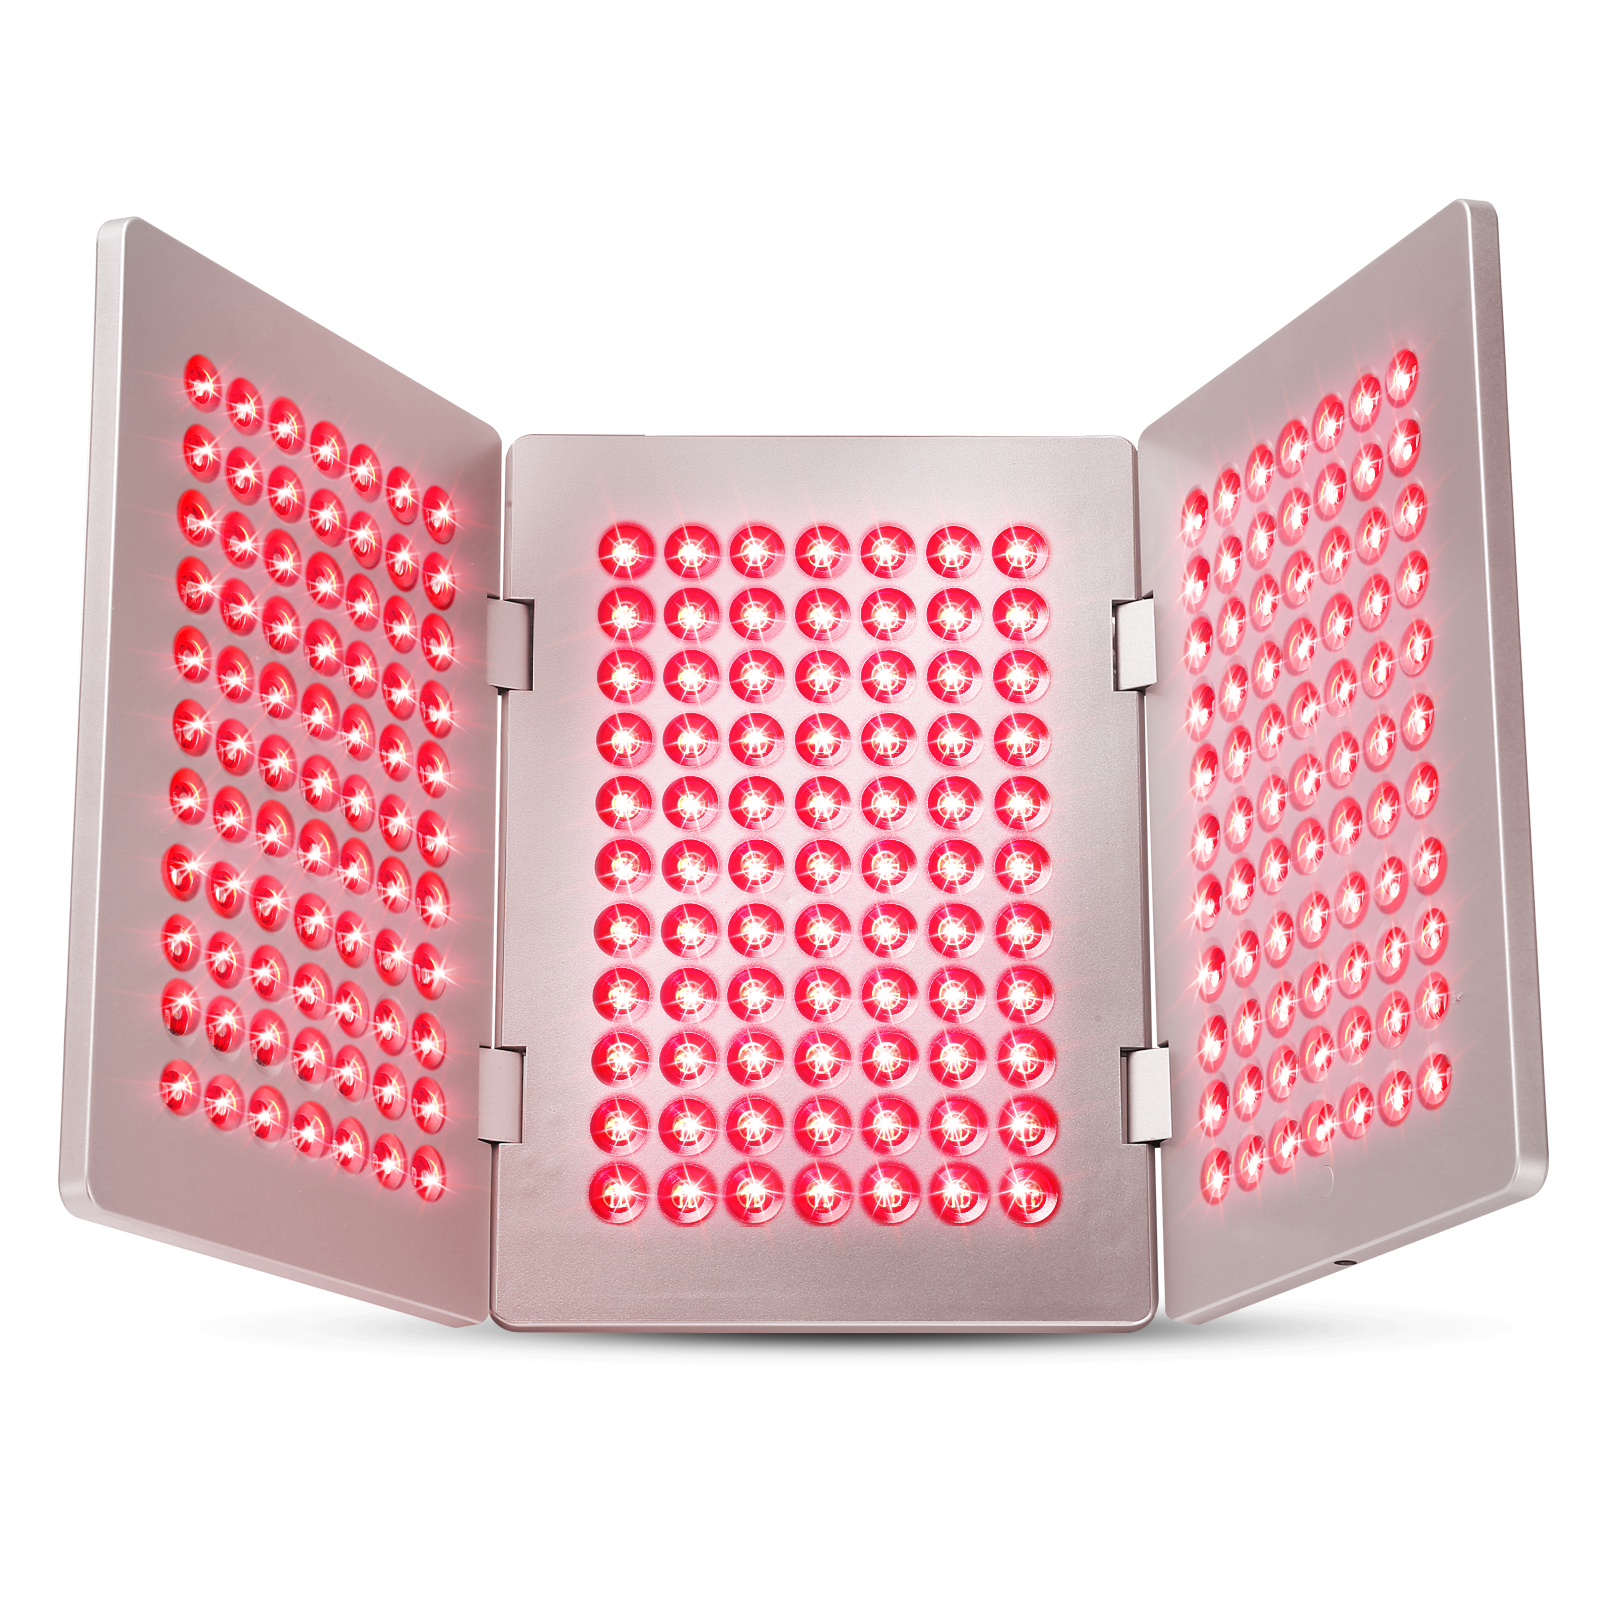 Beste kwaliteit roodlichttherapiepaneel 3 pad - B5 drievoudig paneel - fabriek